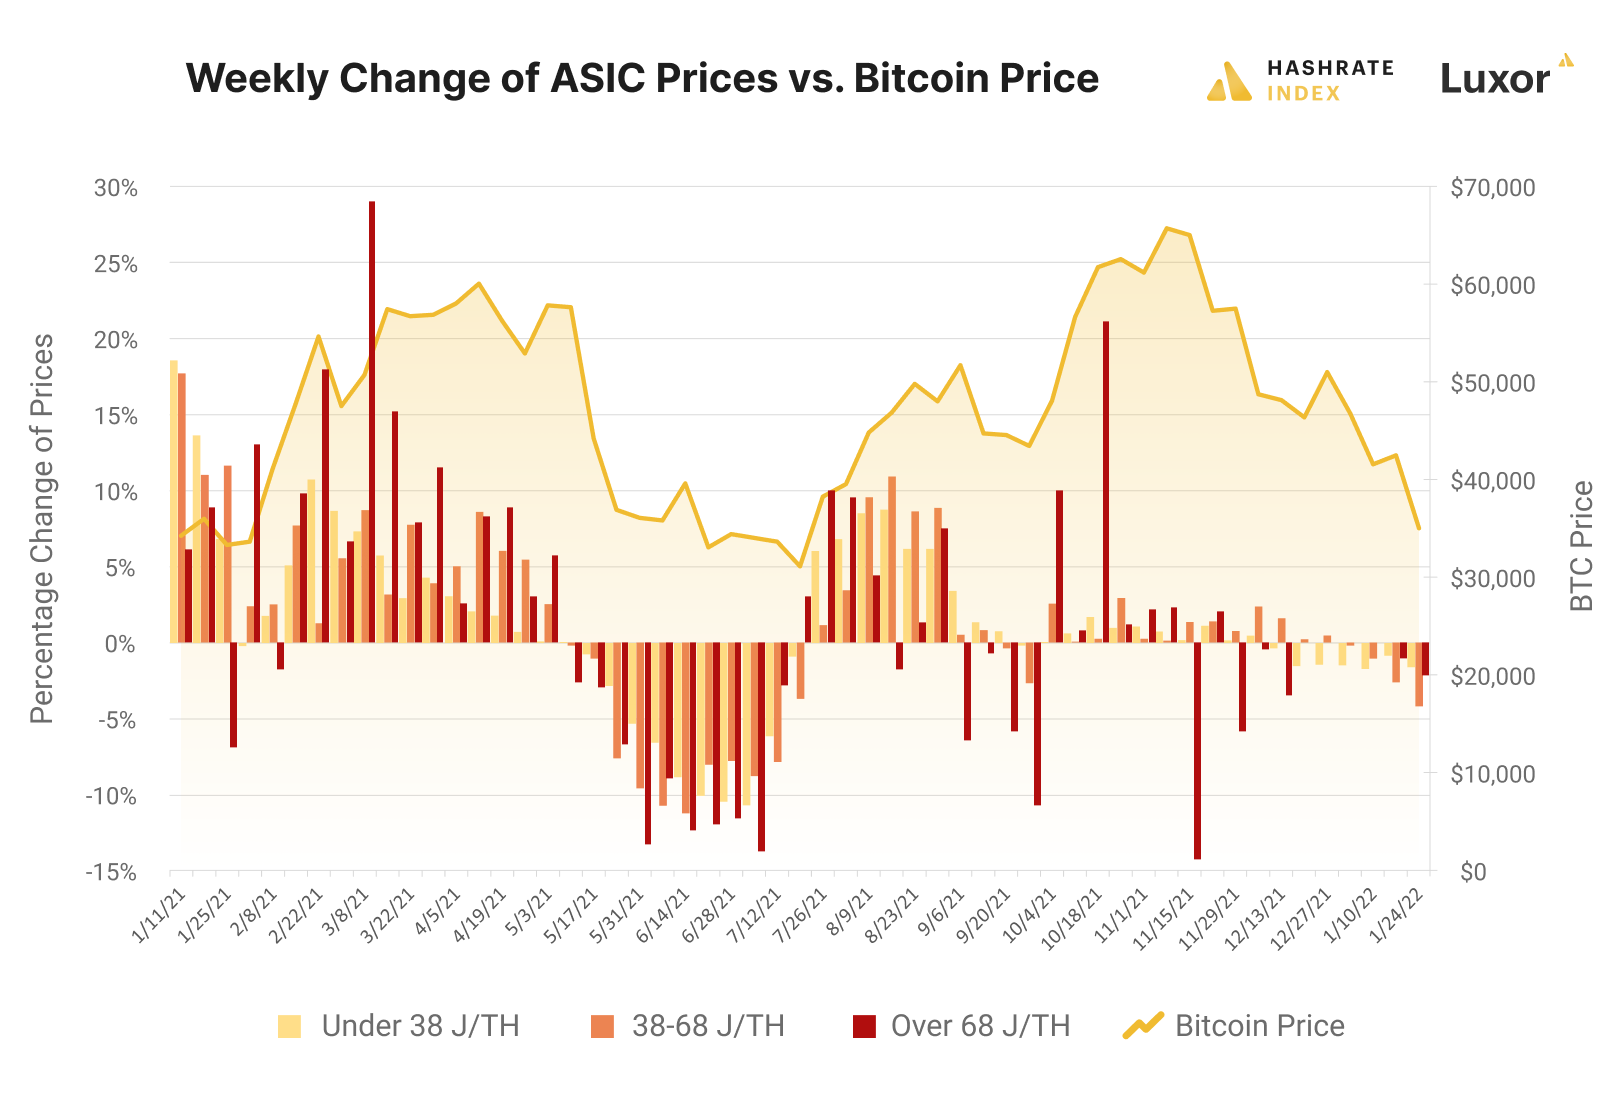 Bitcoin ASIC prices